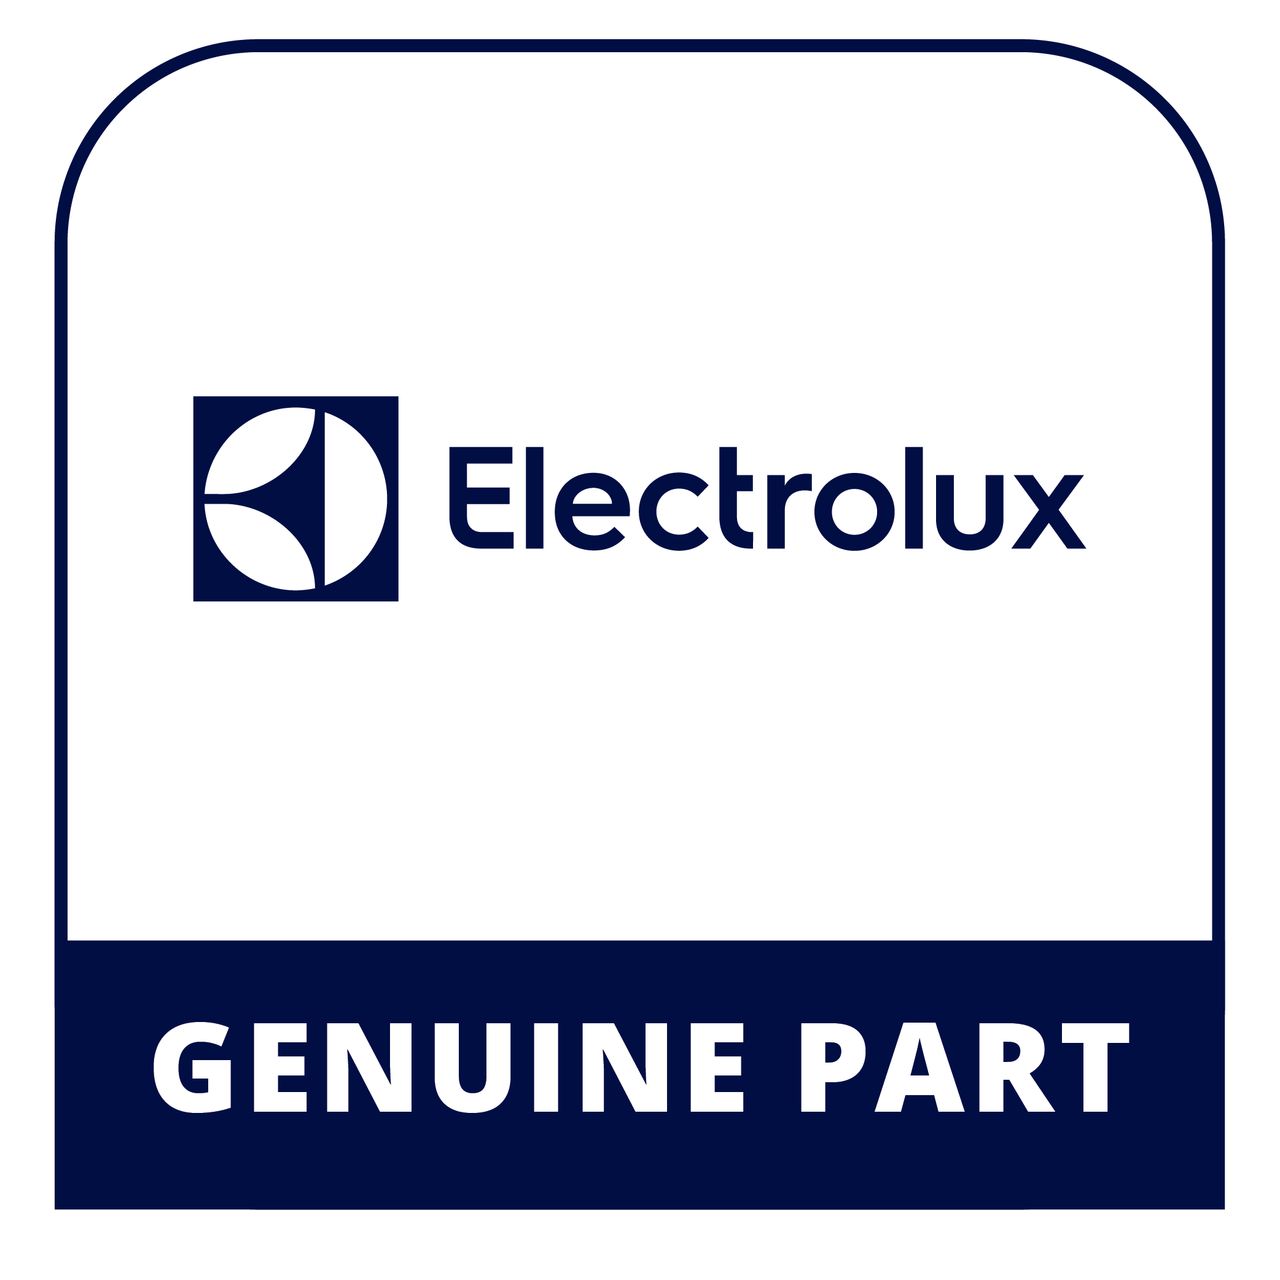 Frigidaire - Electrolux 405526164 Roller Kit - Genuine Electrolux Part